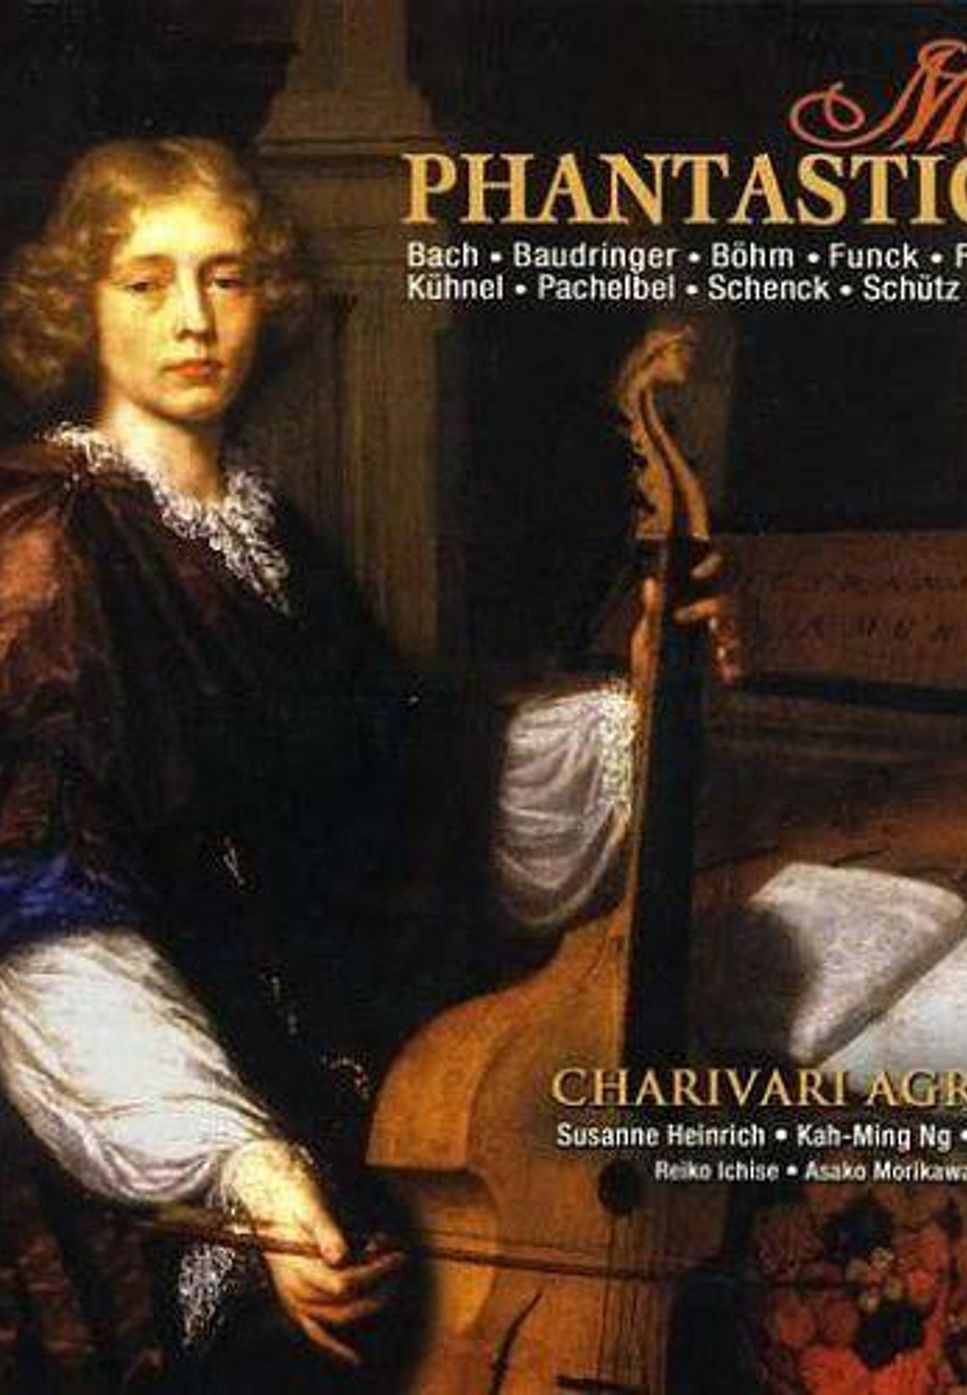 Georg Philipp Telemann - 4 Concerti for 4 Violins, TWV 40:201 (Telemann - 4 Concerti for 4 Violins, TWV 40:201 - String Quartet Original) by poon